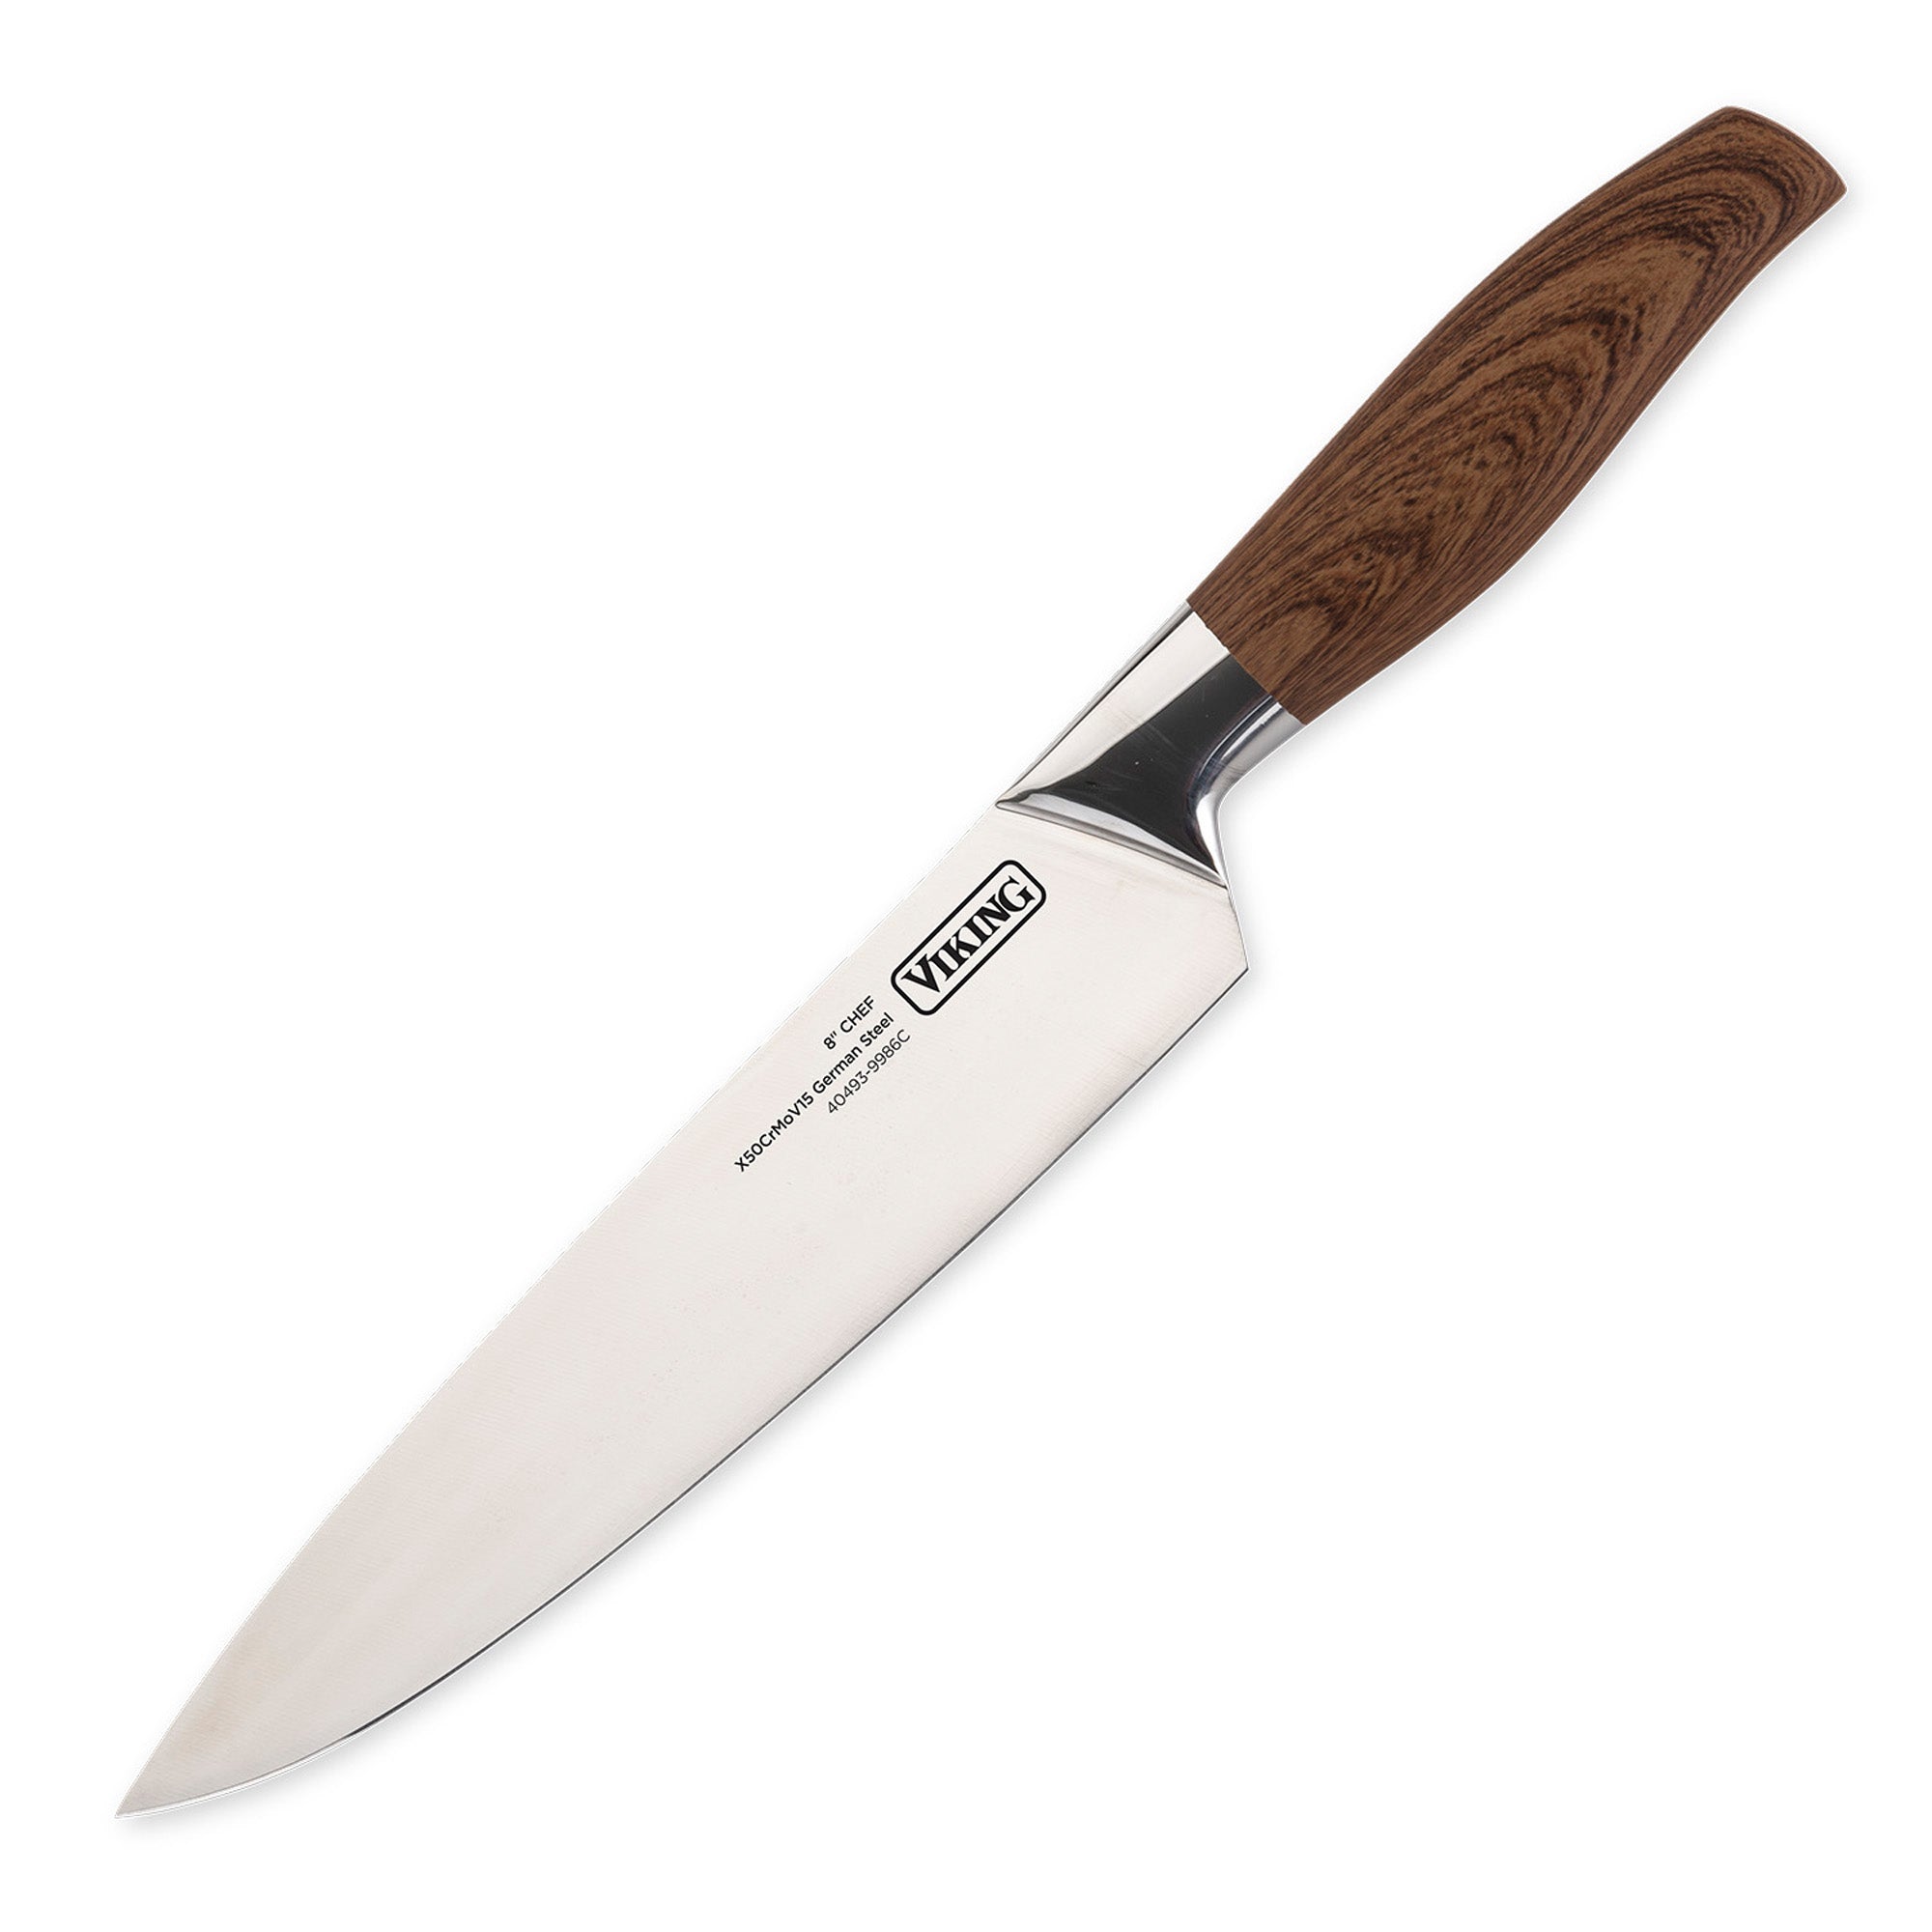 Brand New 16 Piece Fetervic Knife Set Model KS19 MIB!